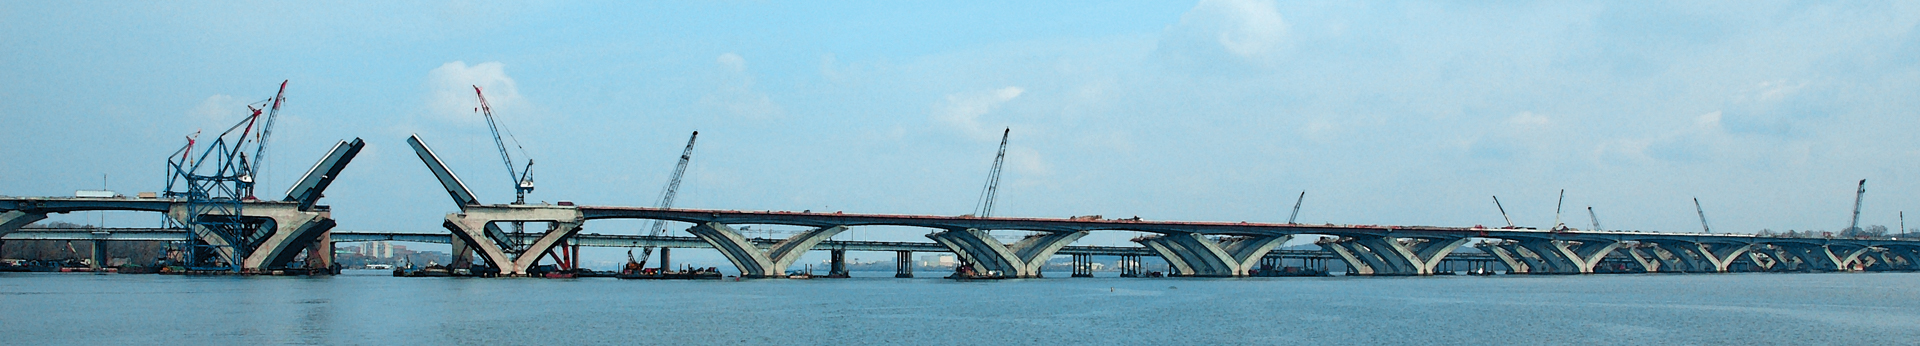 Woodrow Wilson Bridge Project Series: 2006